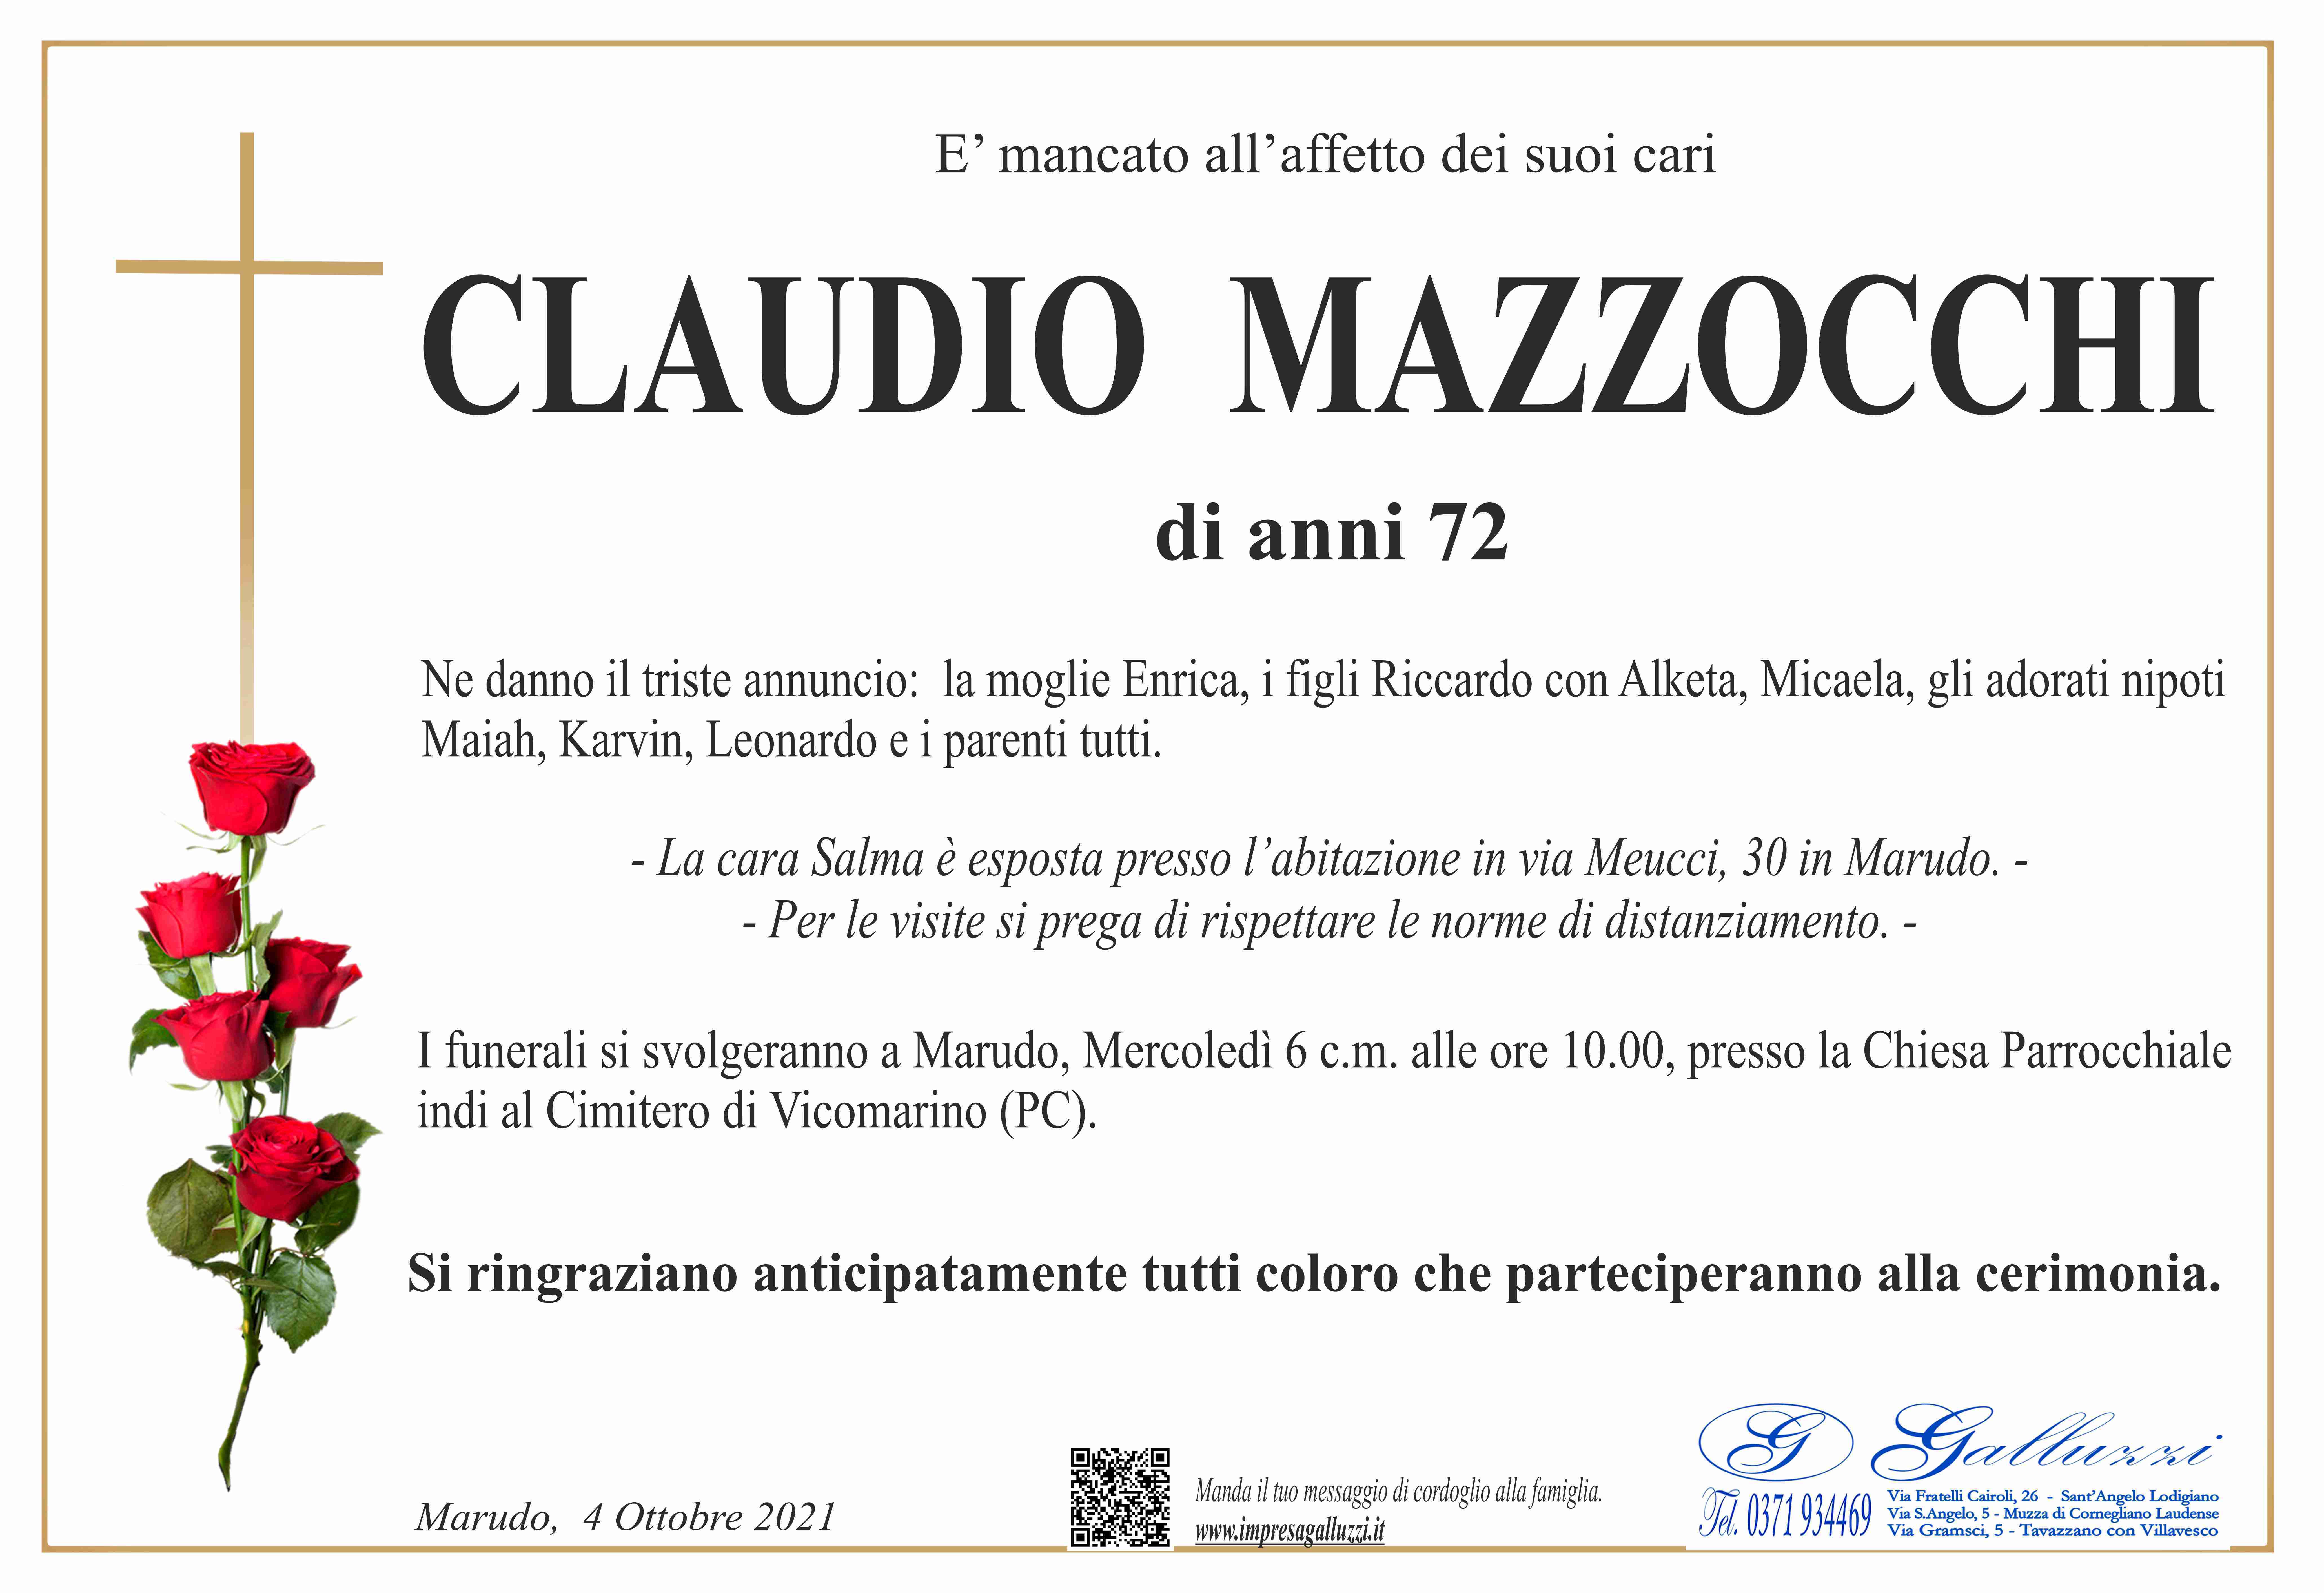 Claudio Mazzocchi